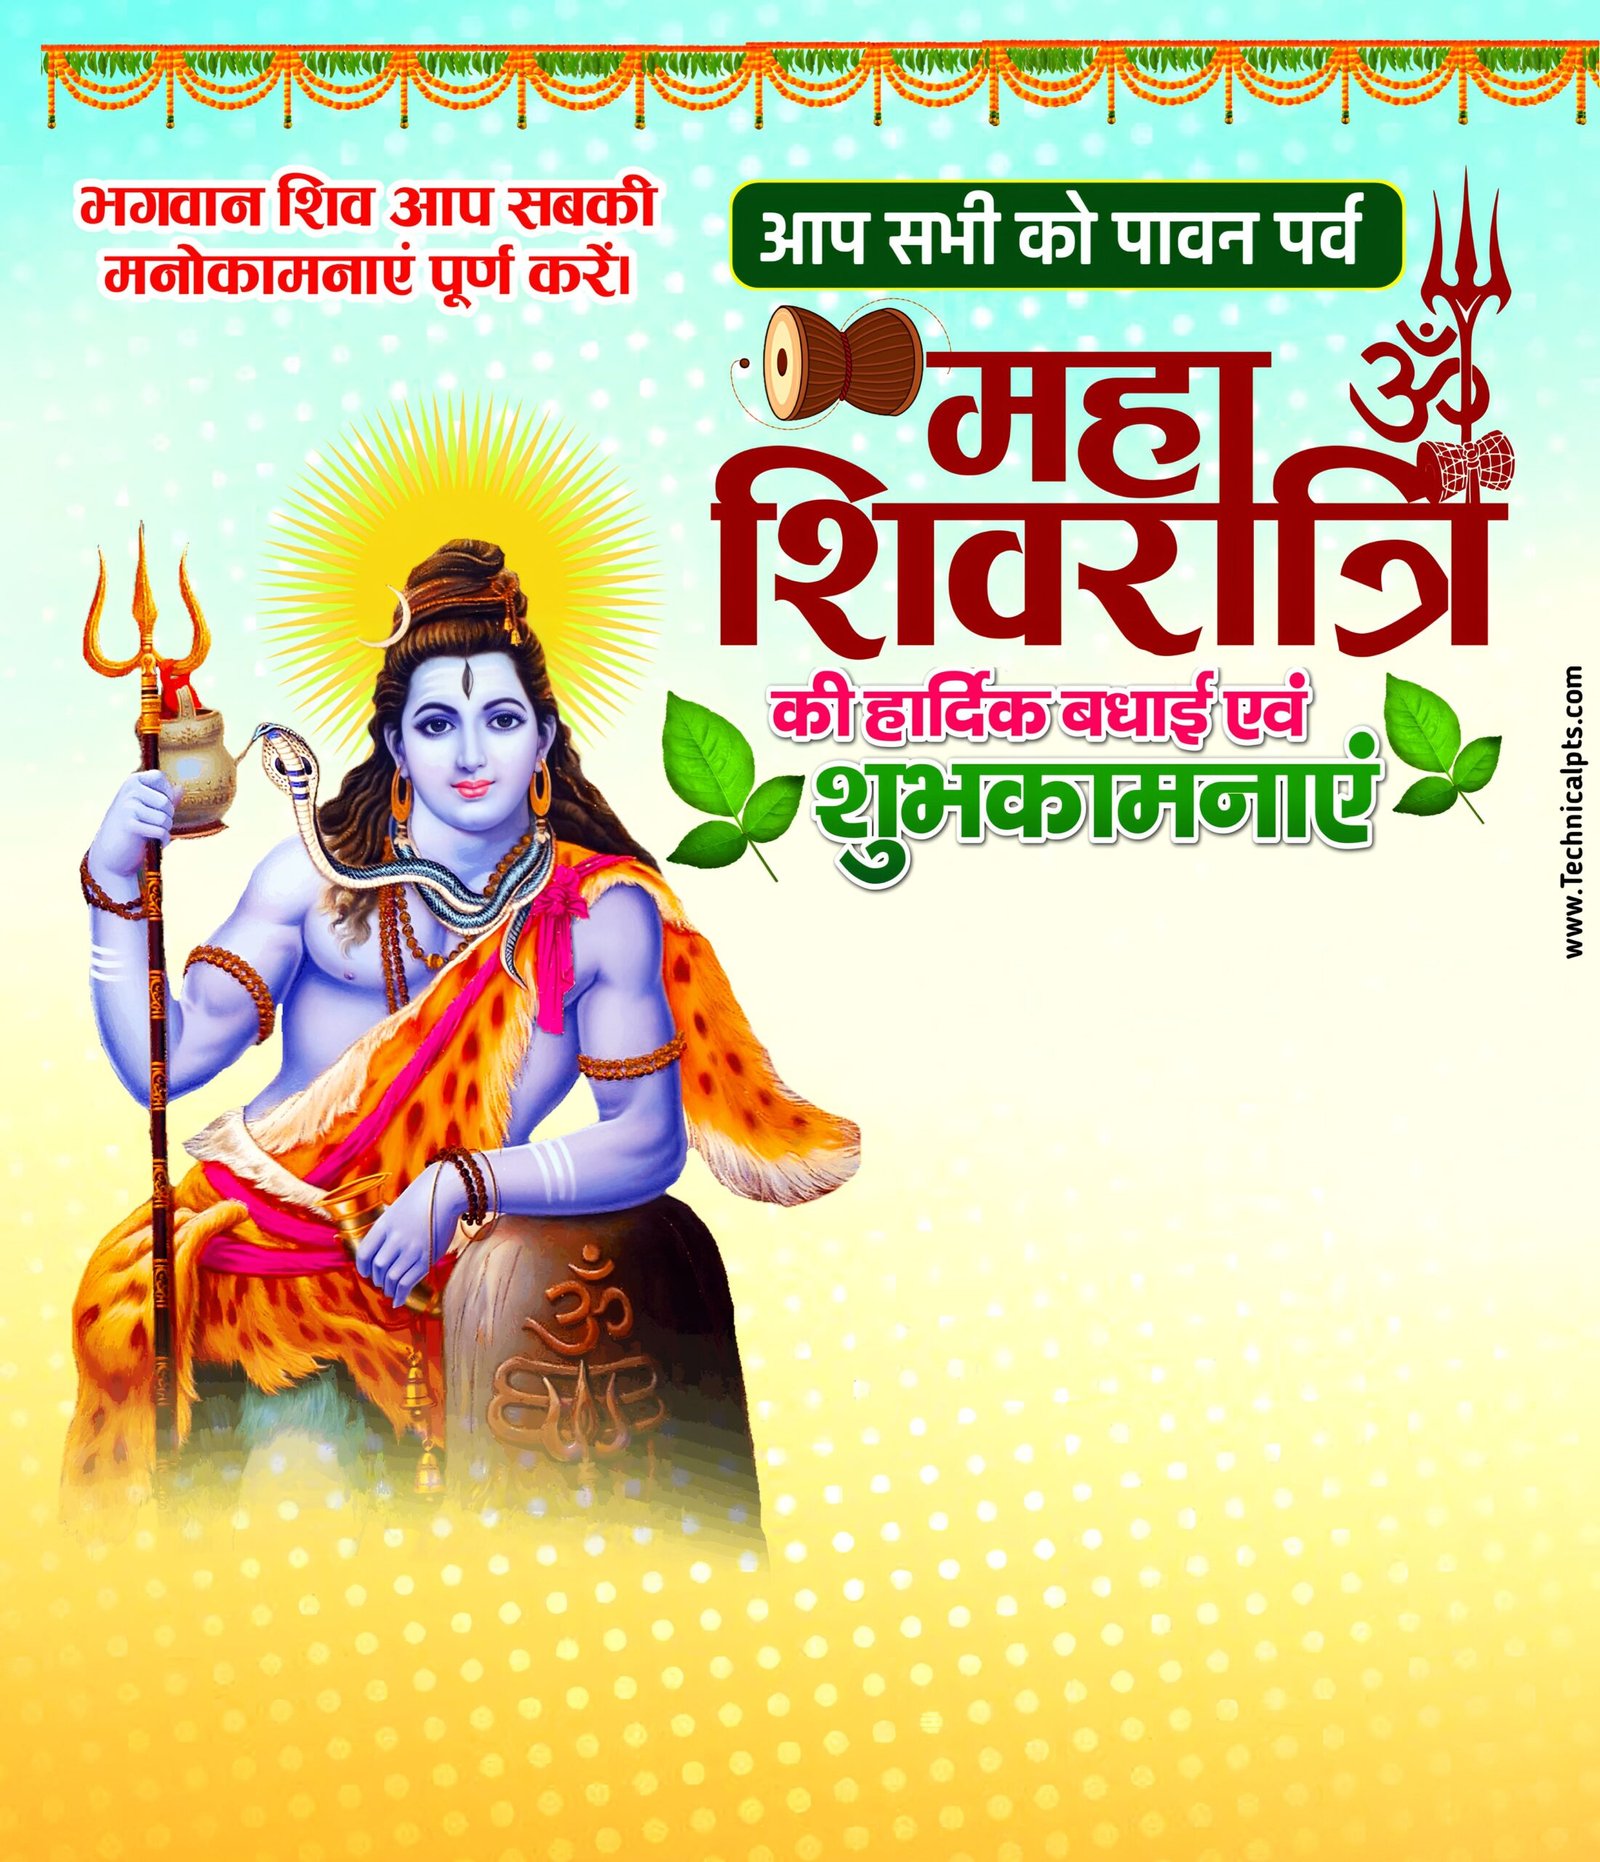 महाशिवरात्रि का पोस्टर बनाये| Maha shivratri poster plp file download| Mahashivratri ka banner Kaise Banaye